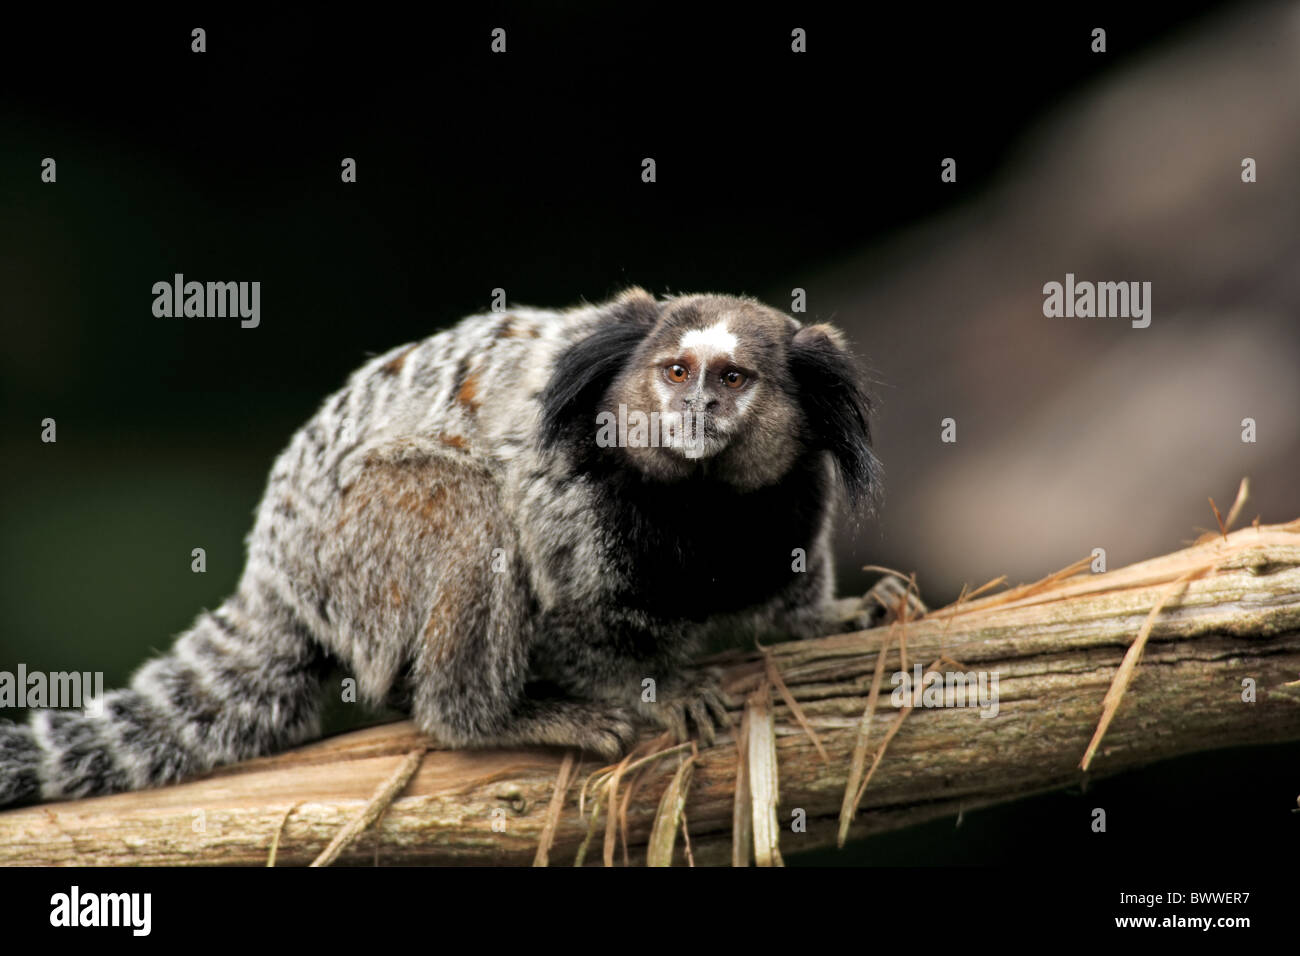 auf Baum - on tree animal animals mammal mammals marmoset marmosets monkey monkeys 'tufted eared' 'tufted-eared' brazil Stock Photo